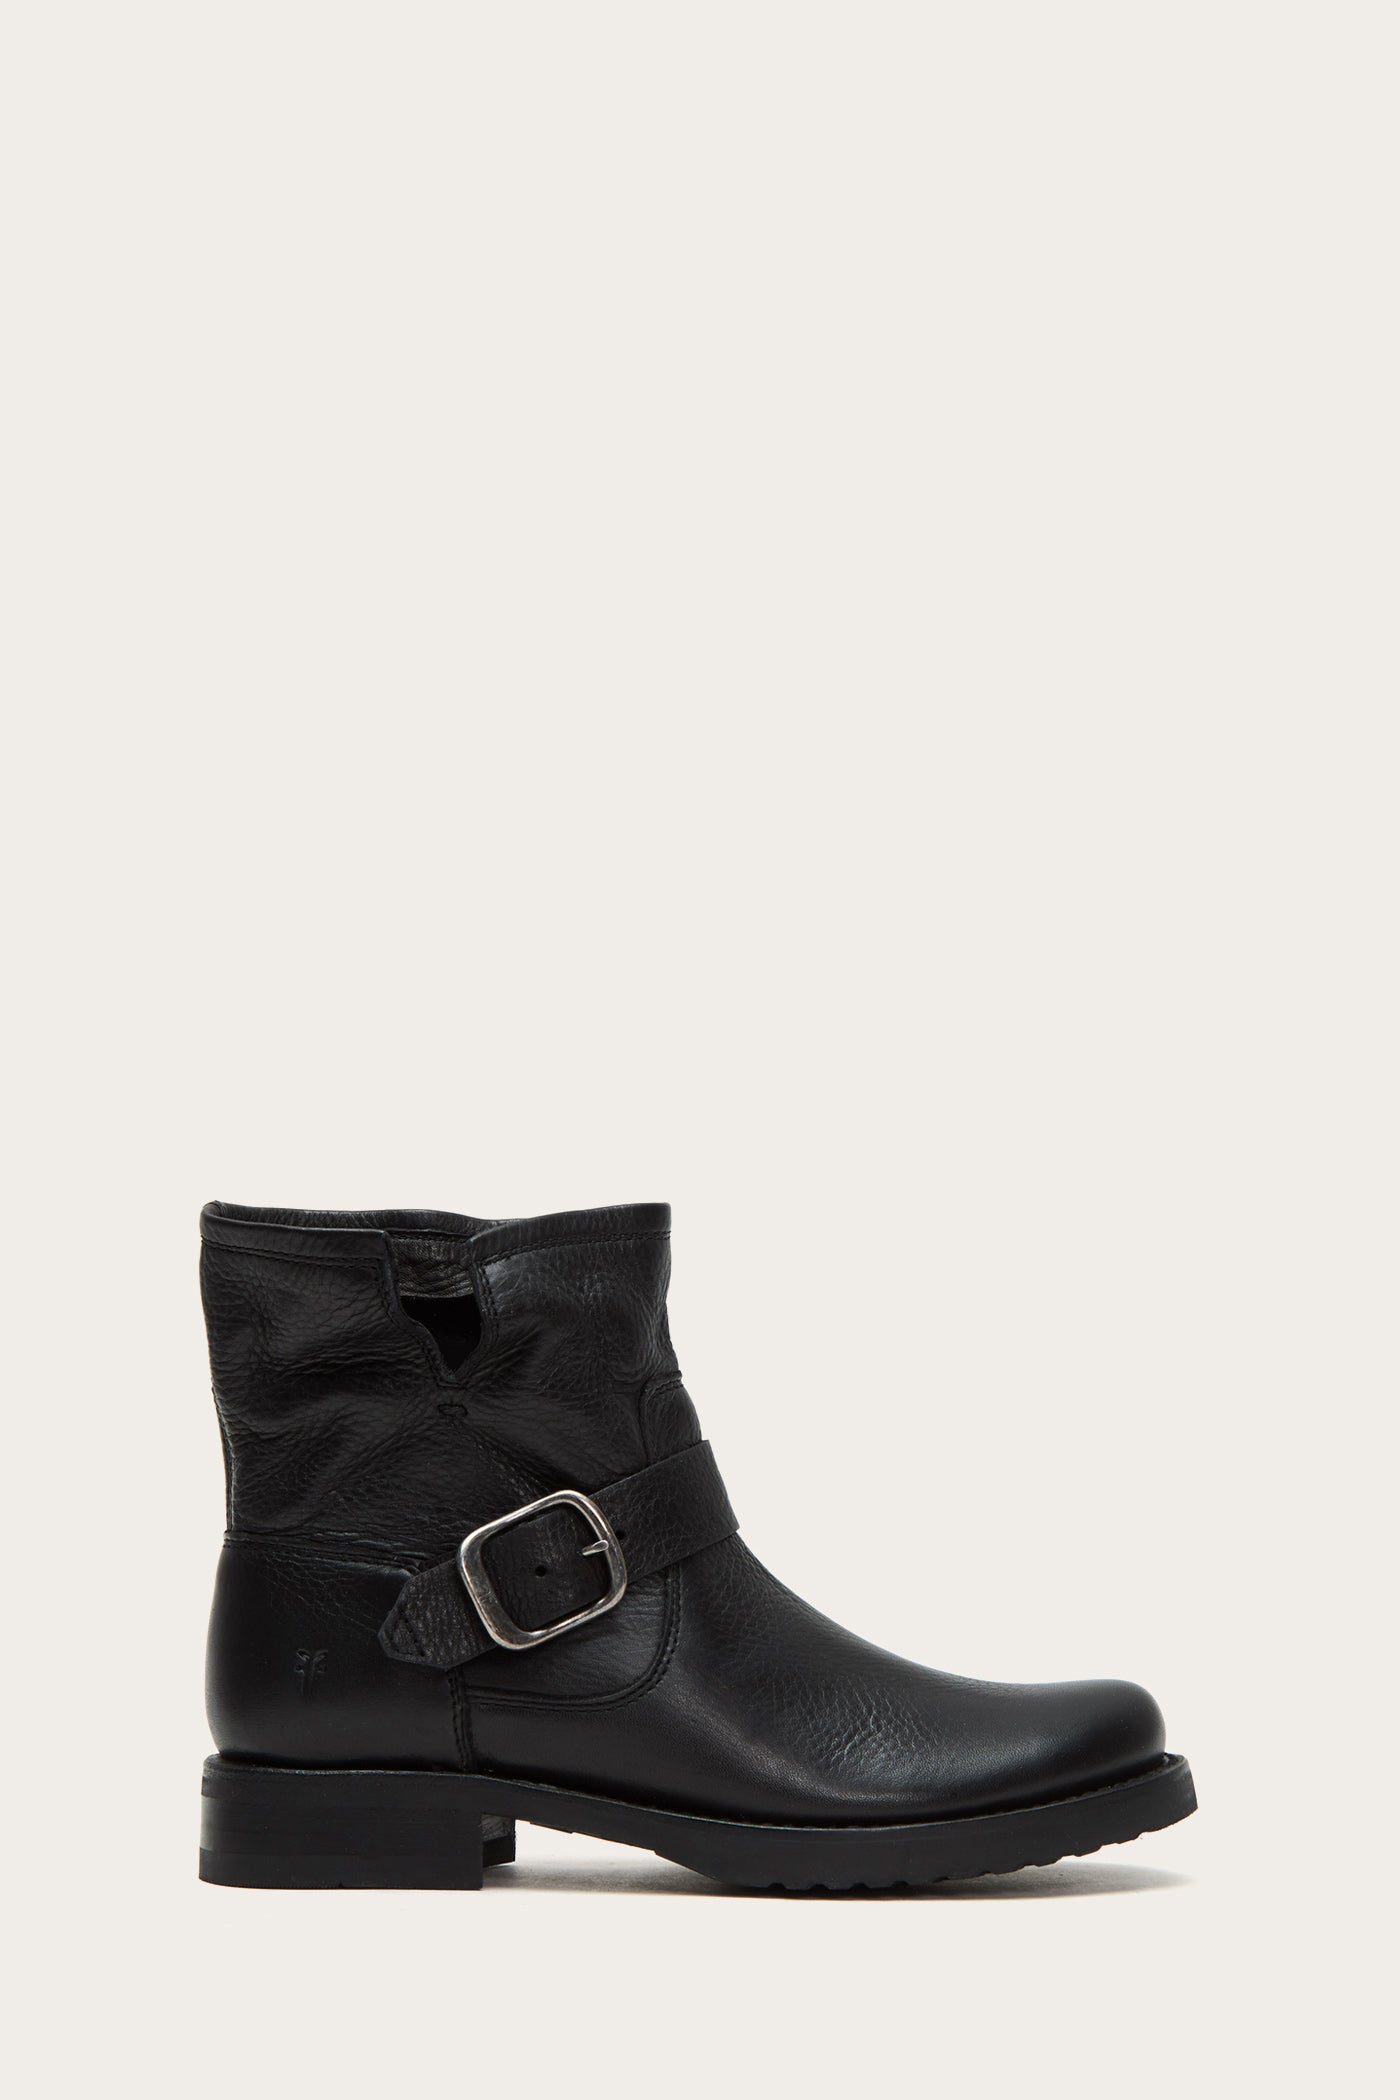 frye black boots sale